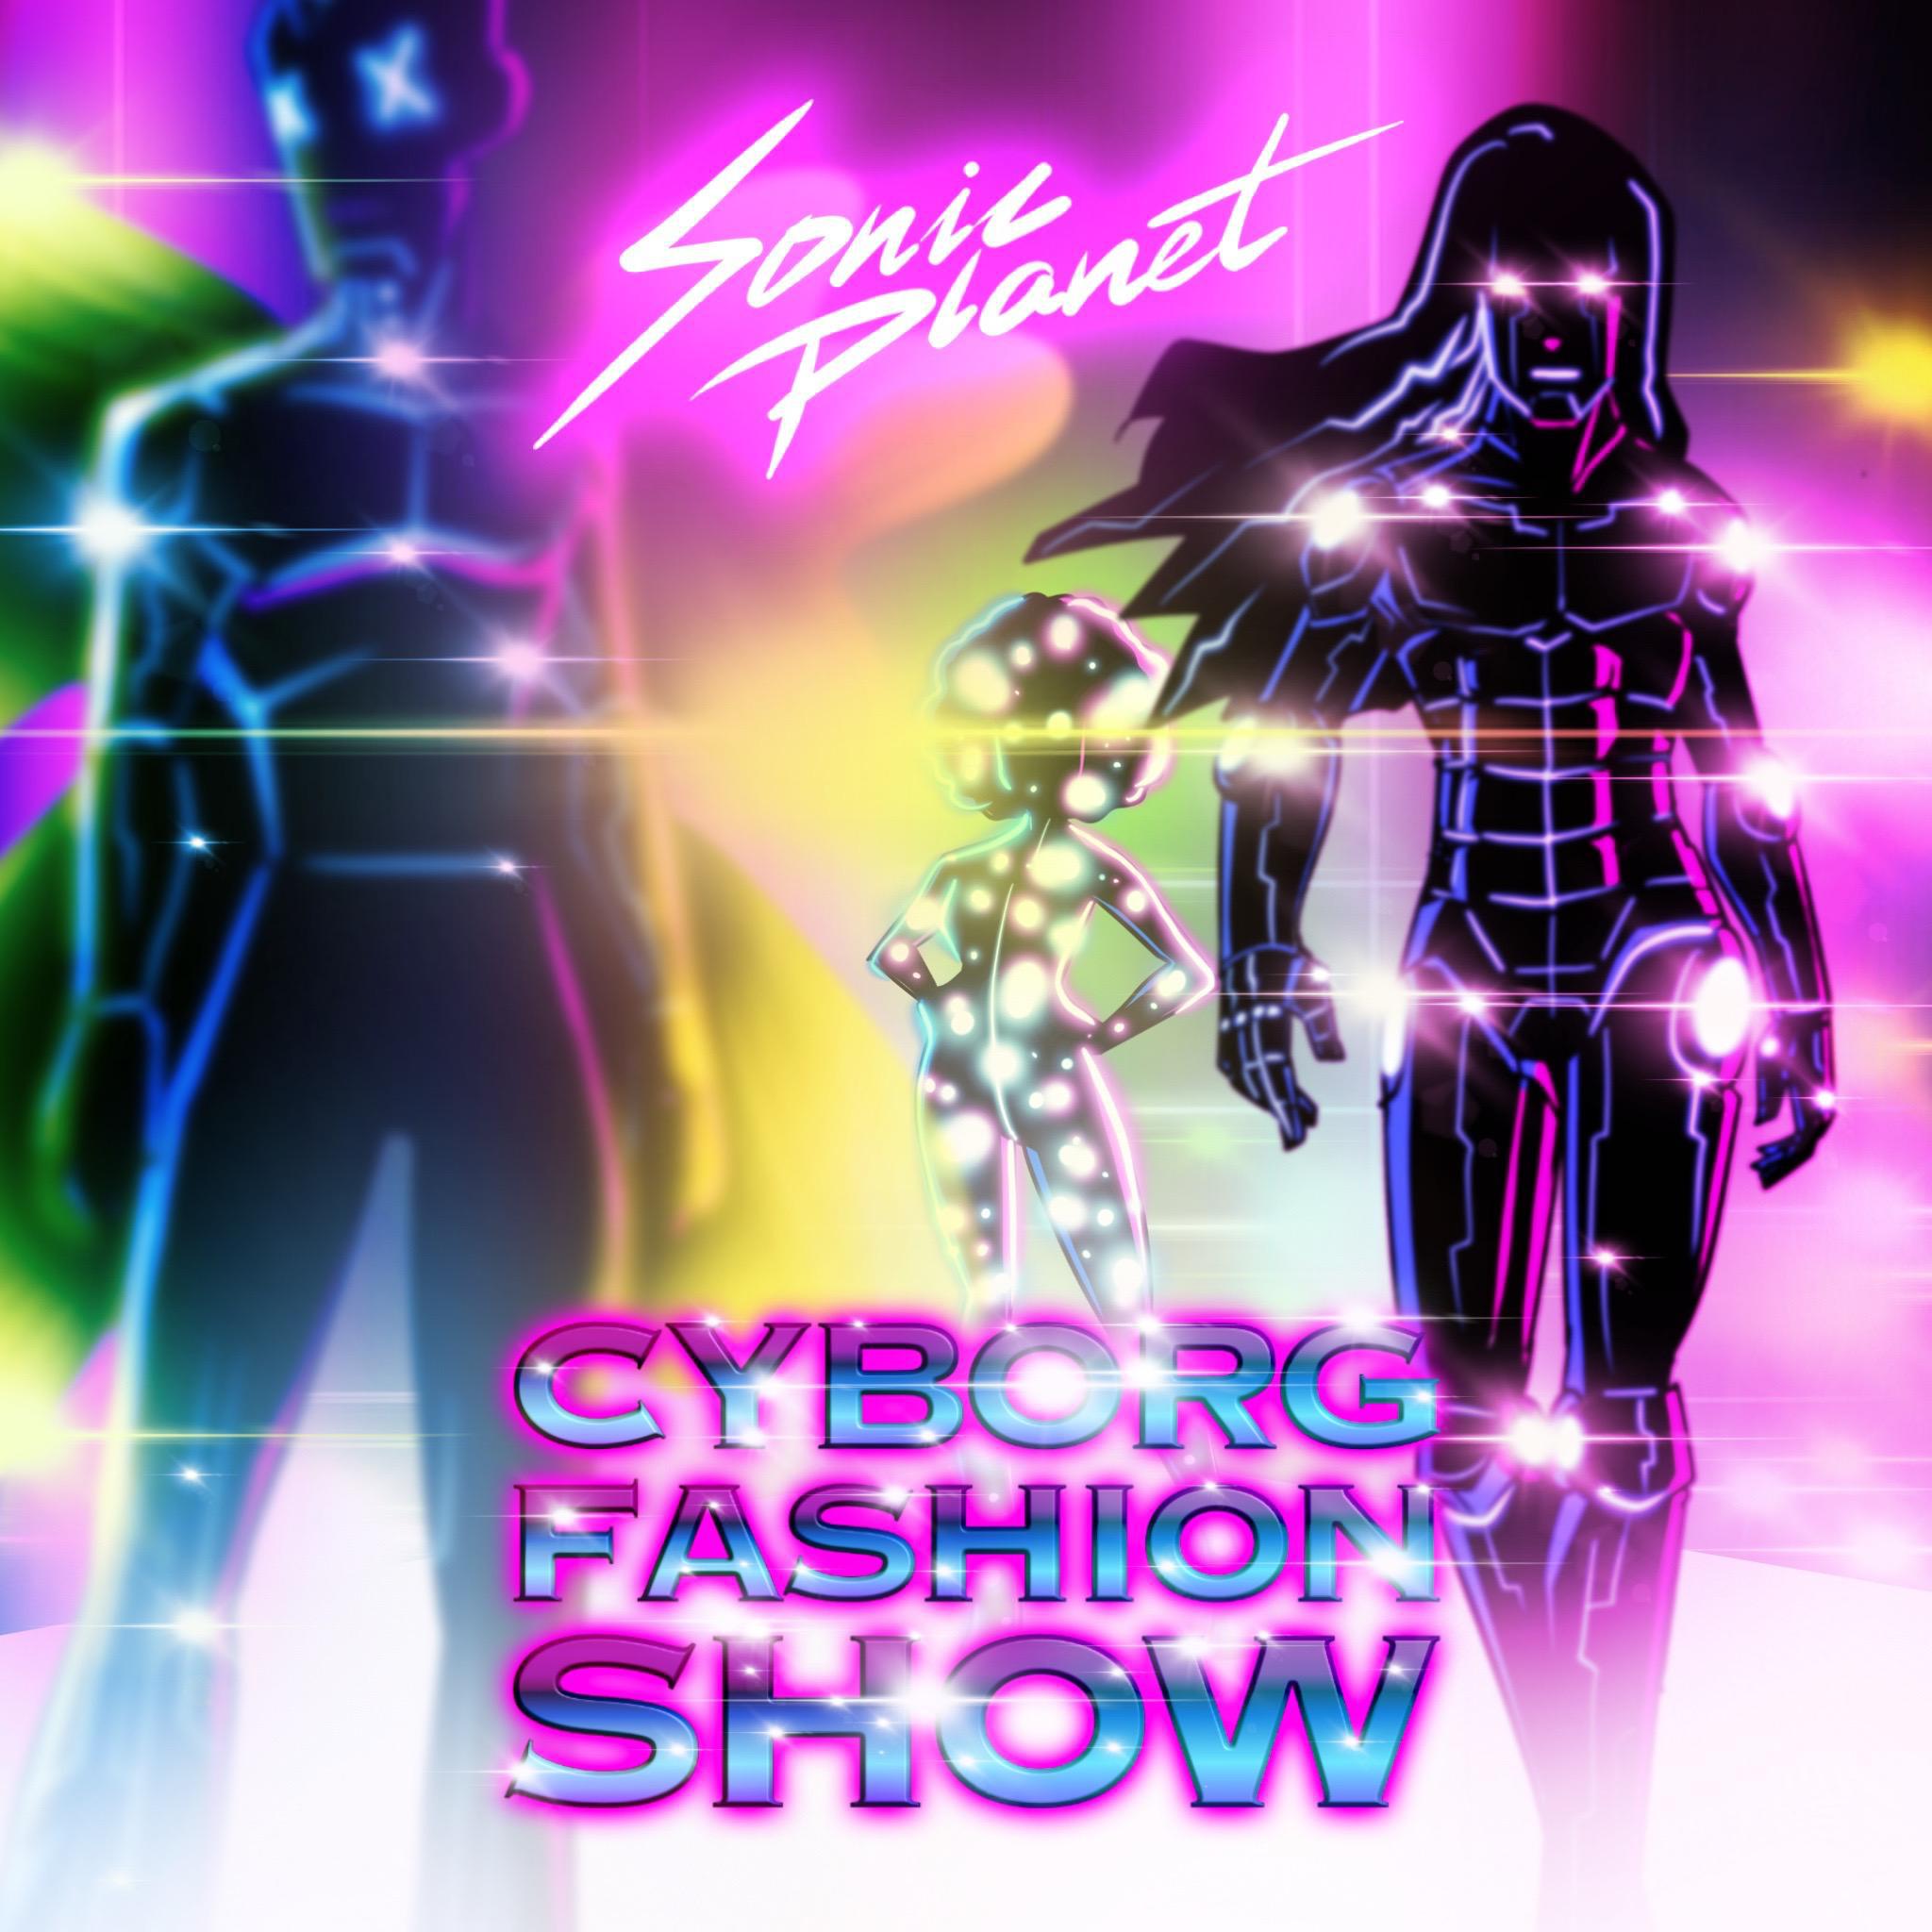 音速行星 - Cyborg fashion show